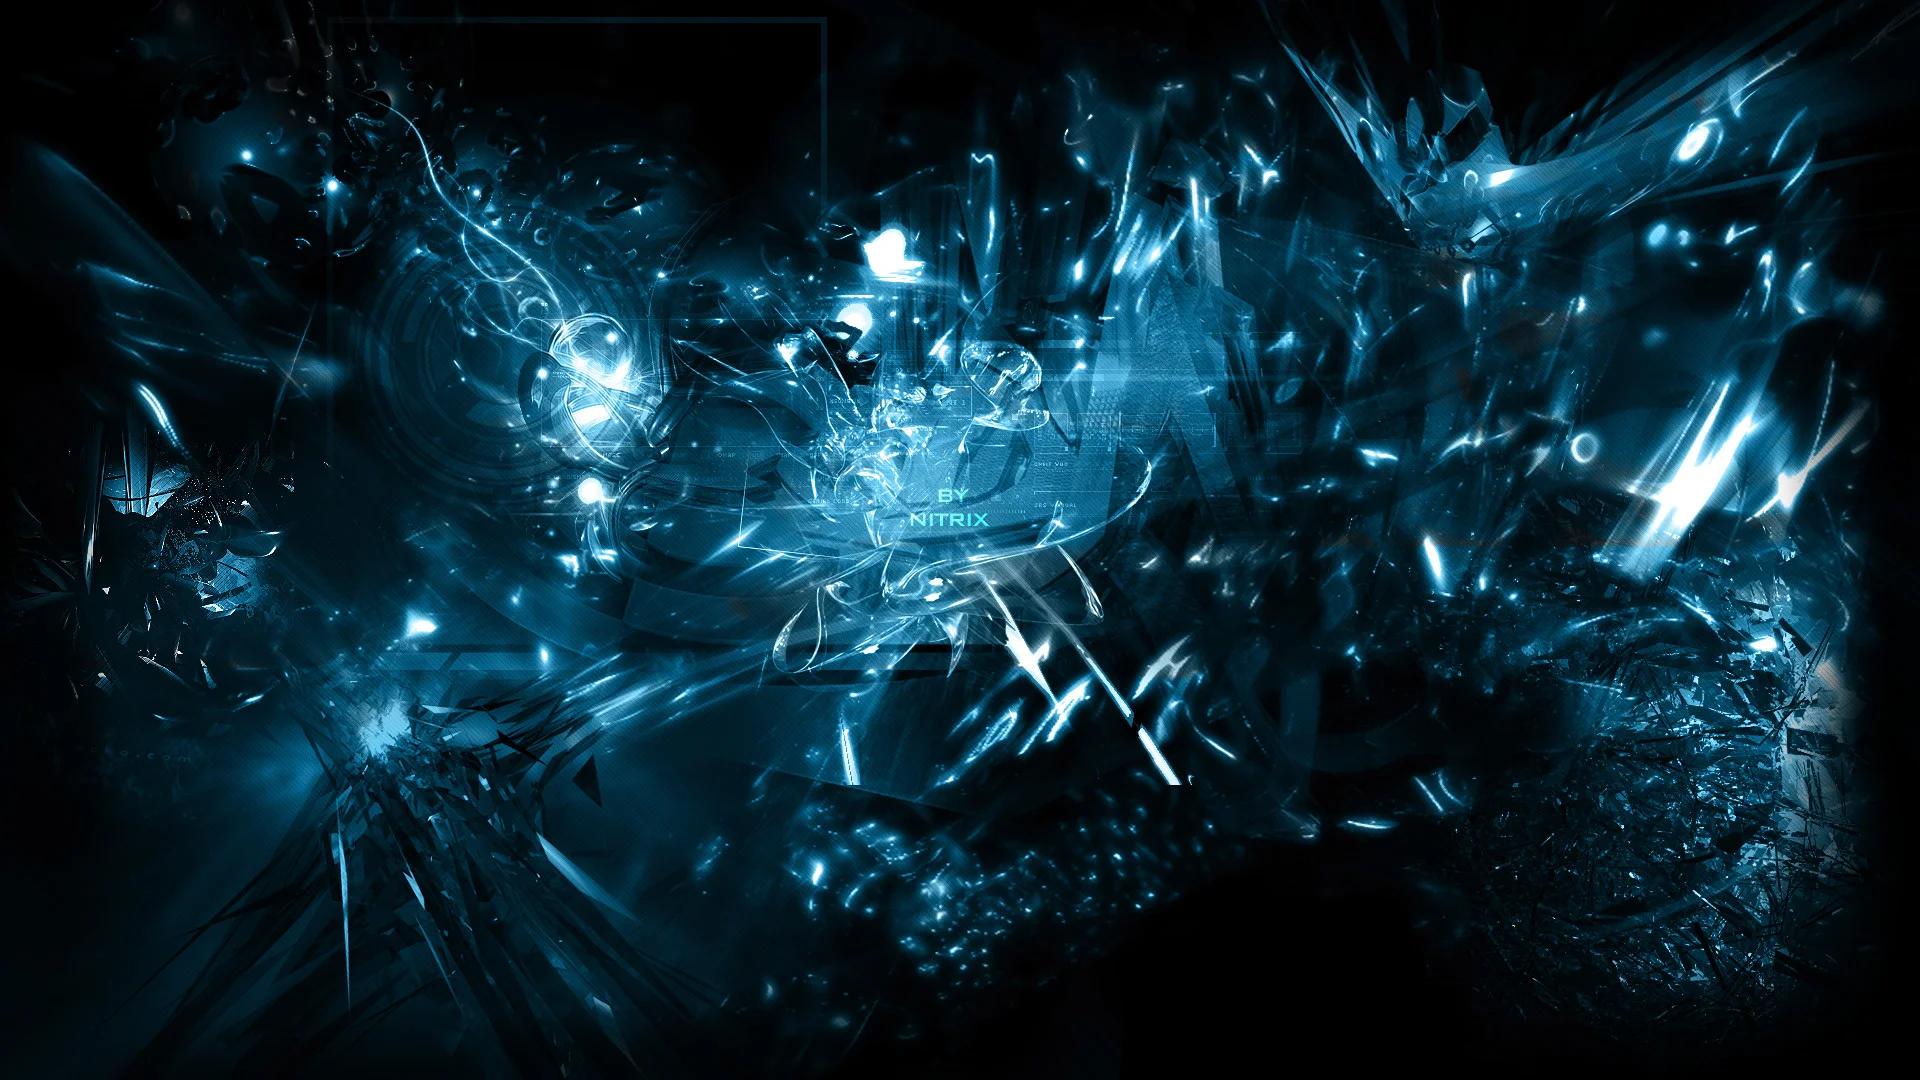 Space abstract wallpaper by nitr1x digital art mixed media abstract